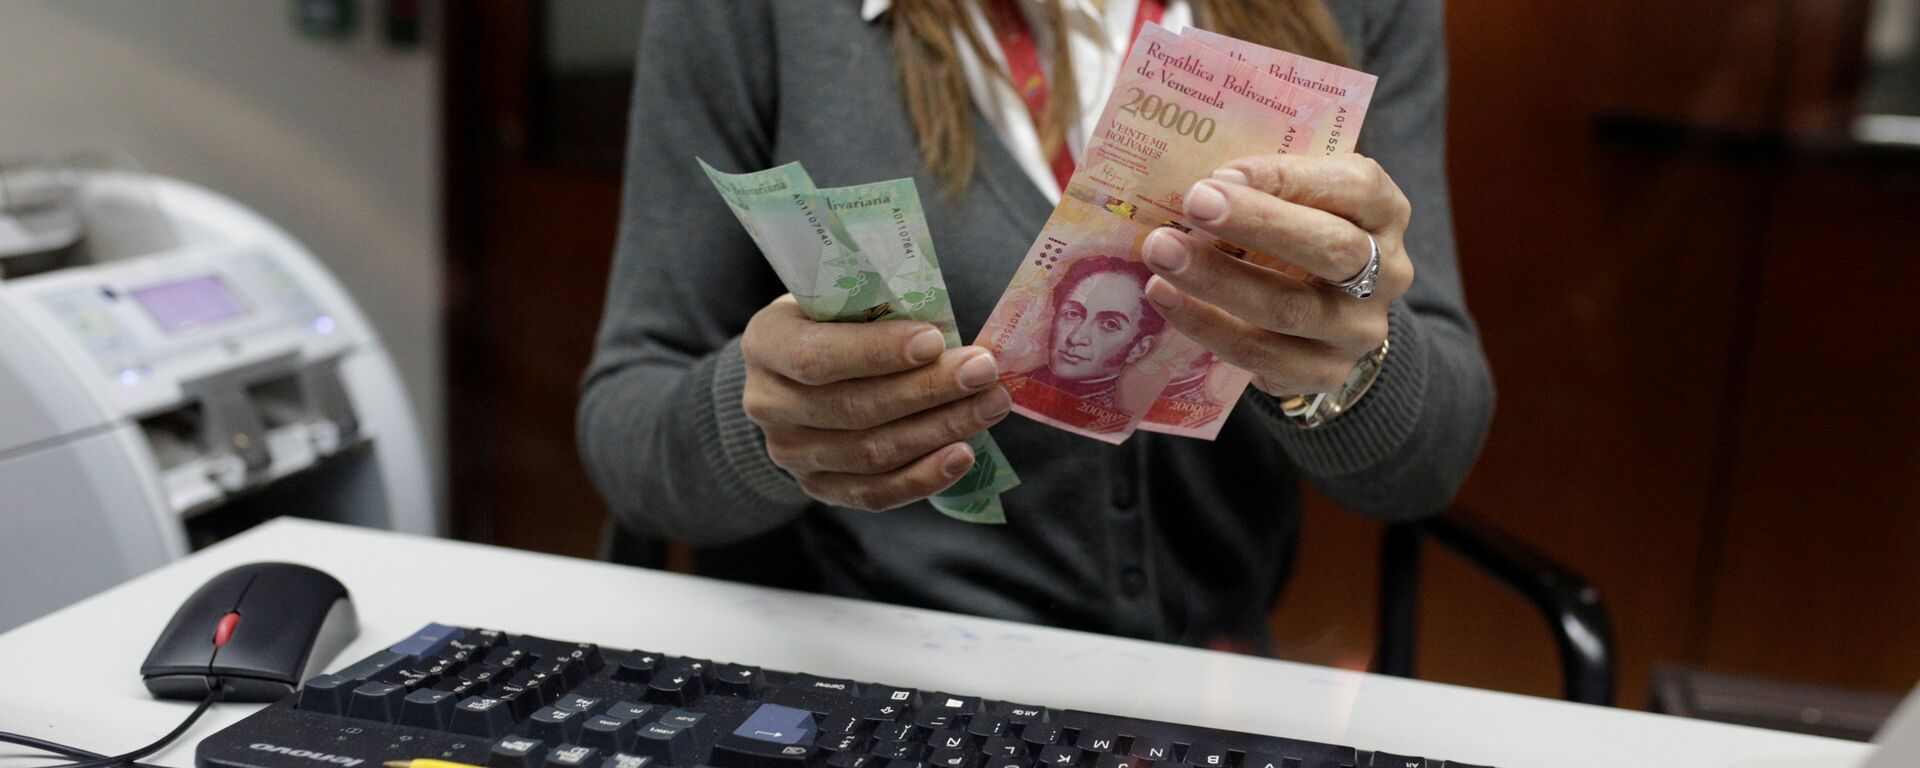 A bank teller counts bolivar banknotes at a Banco de Venezuela branch in Caracas - Sputnik Mundo, 1920, 21.01.2021